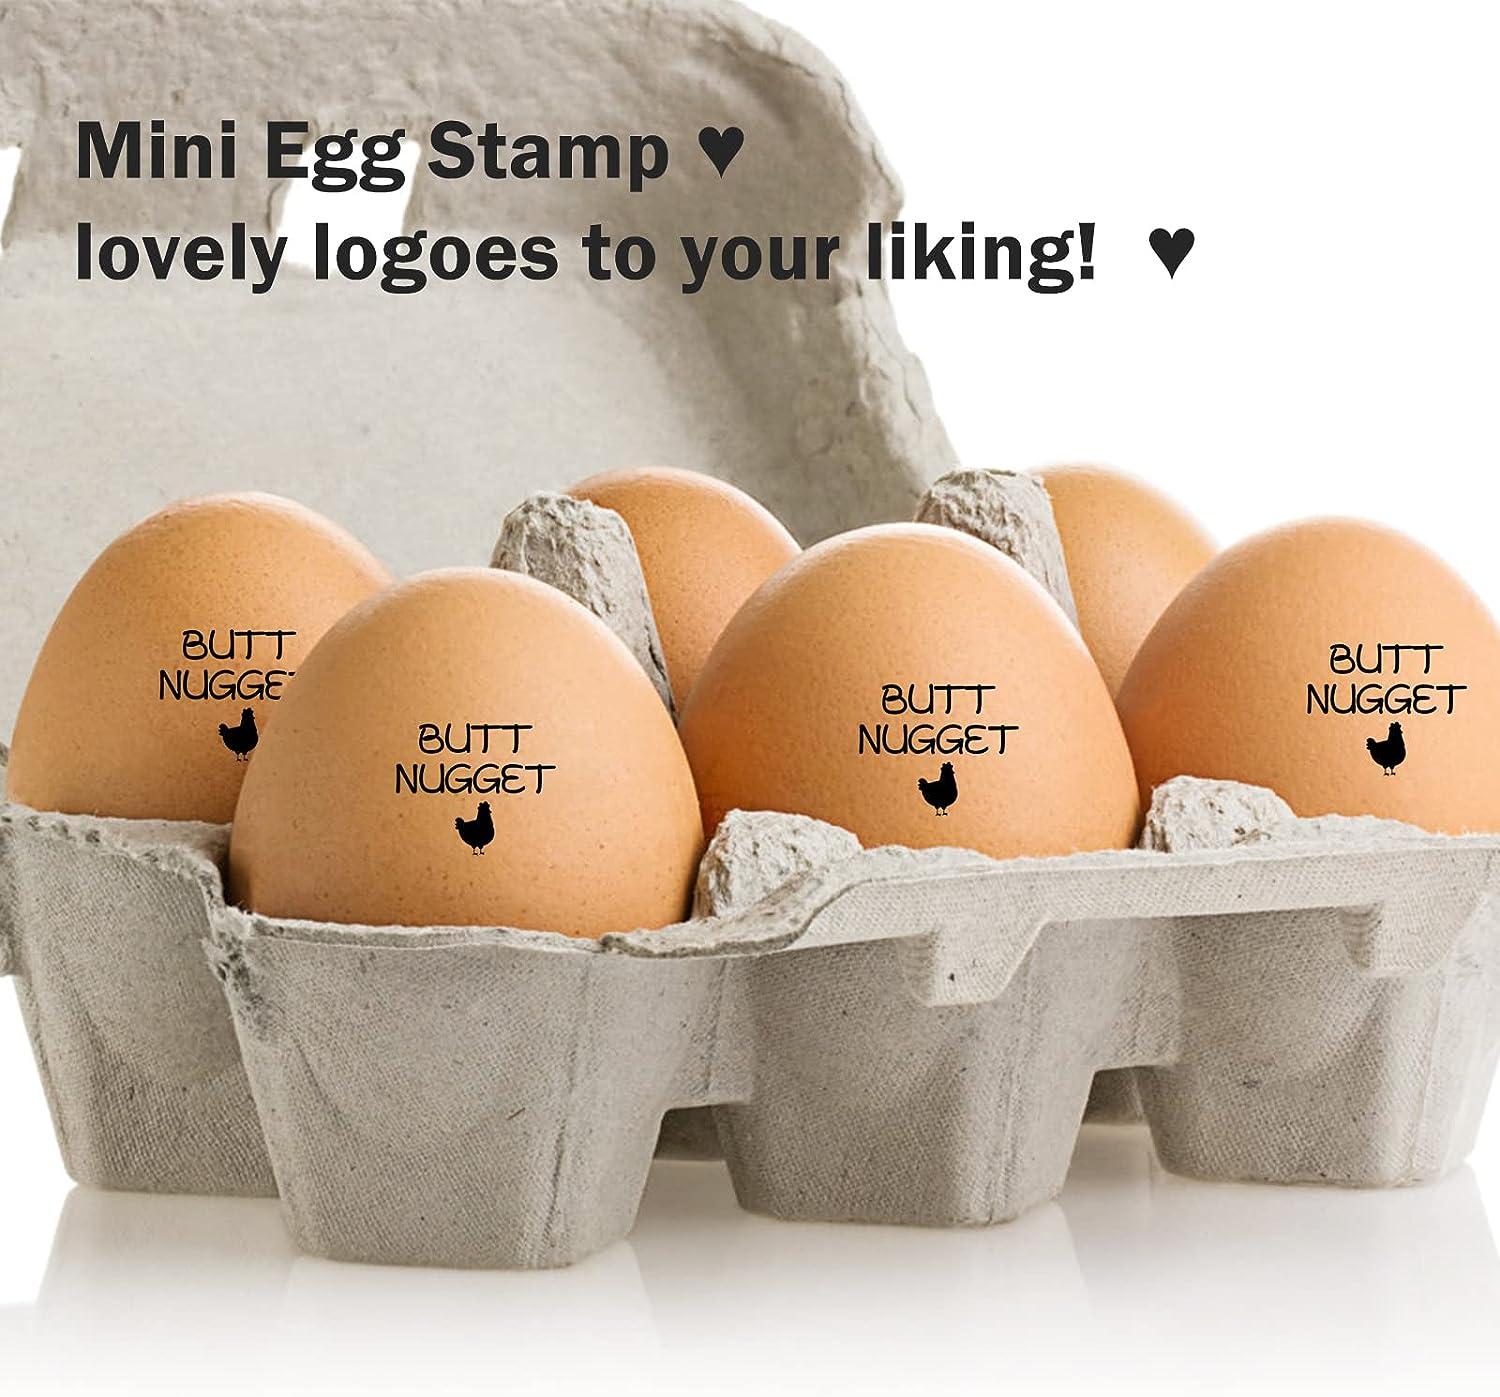 Egg Stamp - Personalised Egg Stamps for stamping egg shells